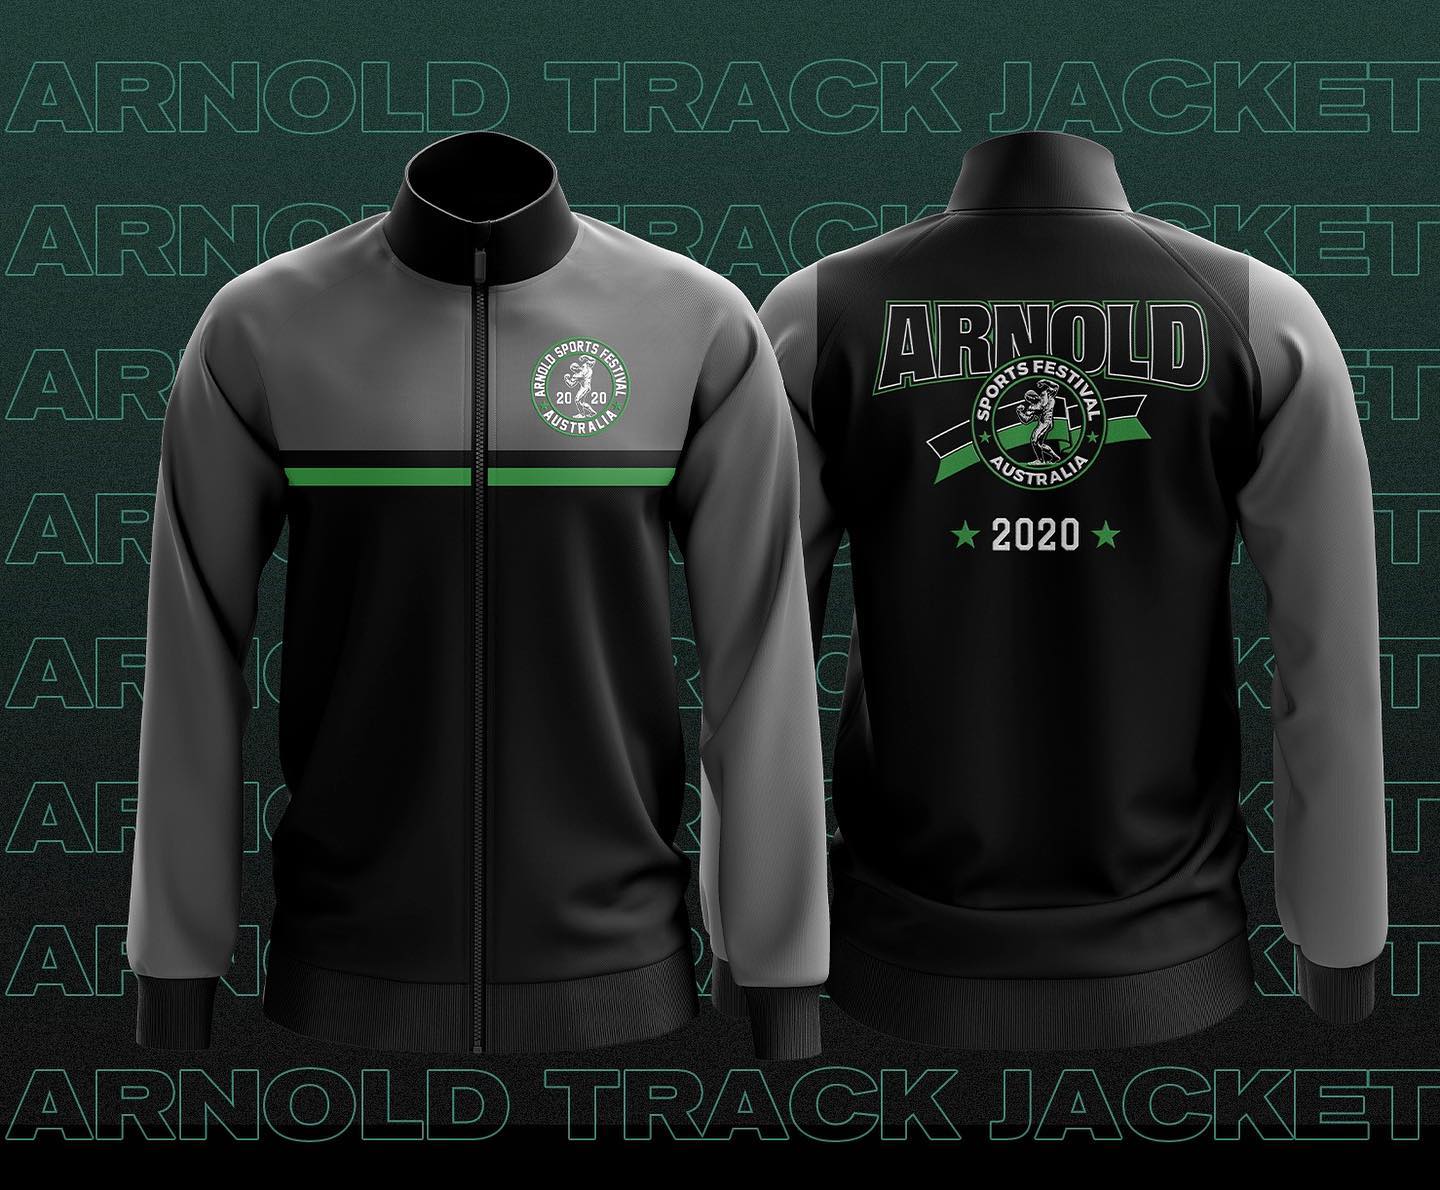 Arnold Track Jacket - 2020